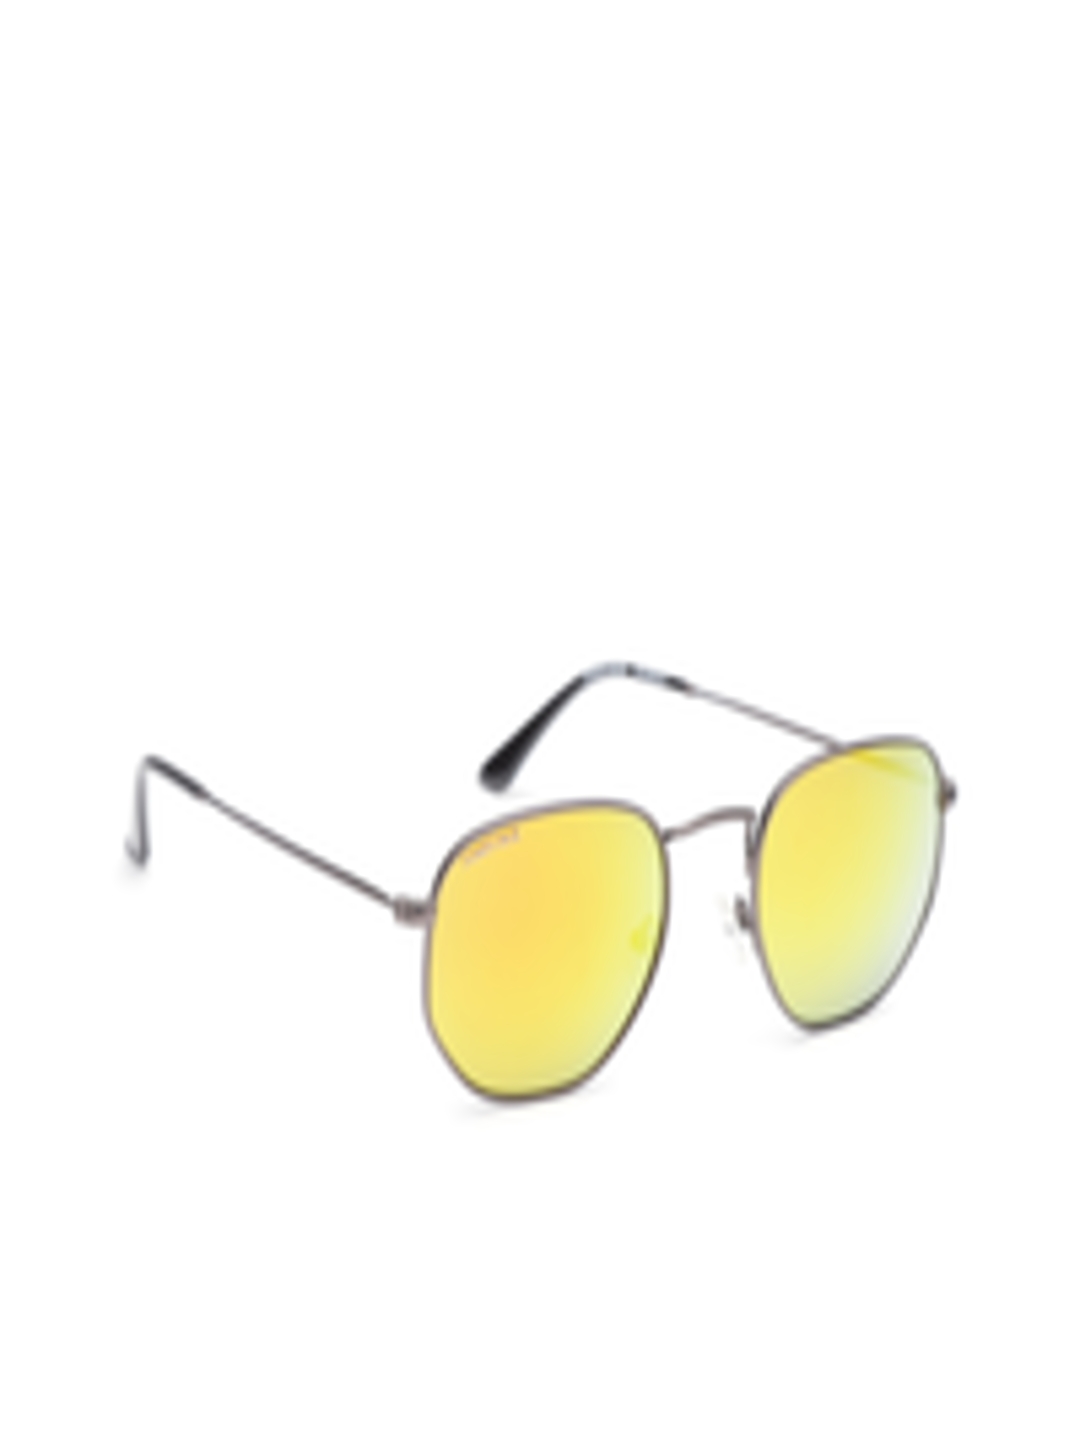 Fastrack M187GR2 Sunglasses For Men | Eccoci Online Shop